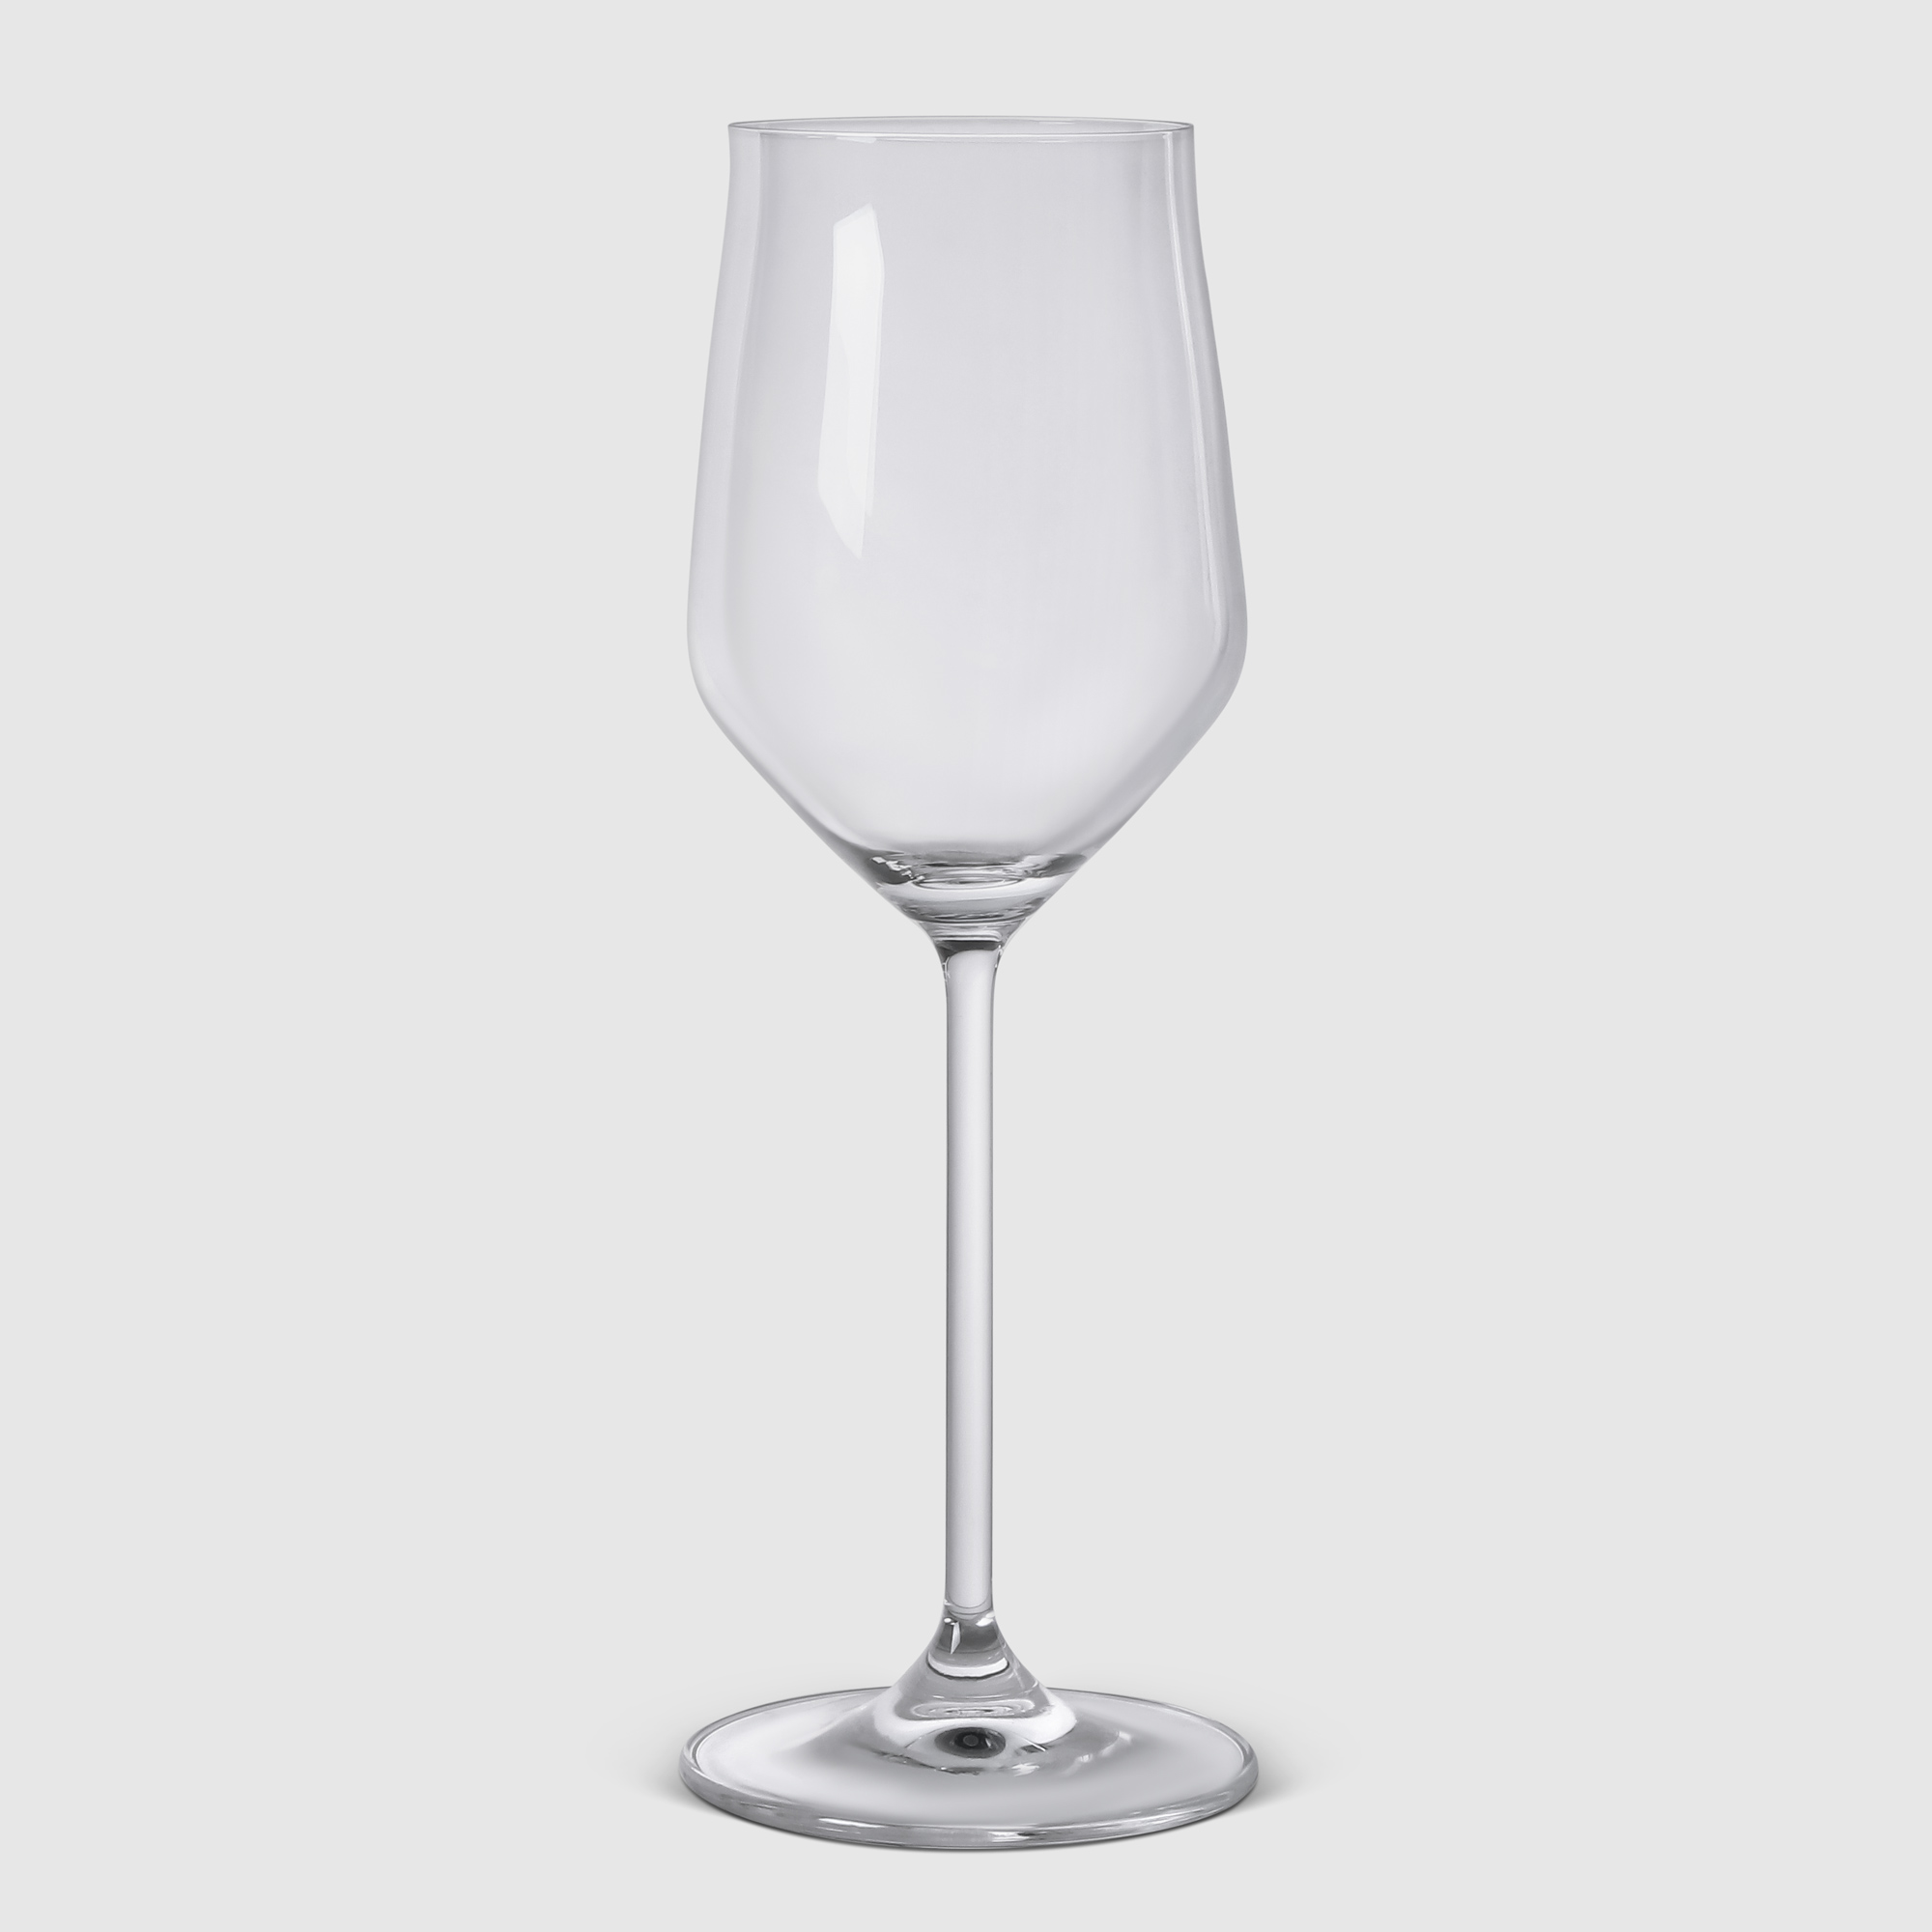 Бокал Wittkemper 10296700 для белого вина бокал для белого вина riedel o to go wine 375 мл